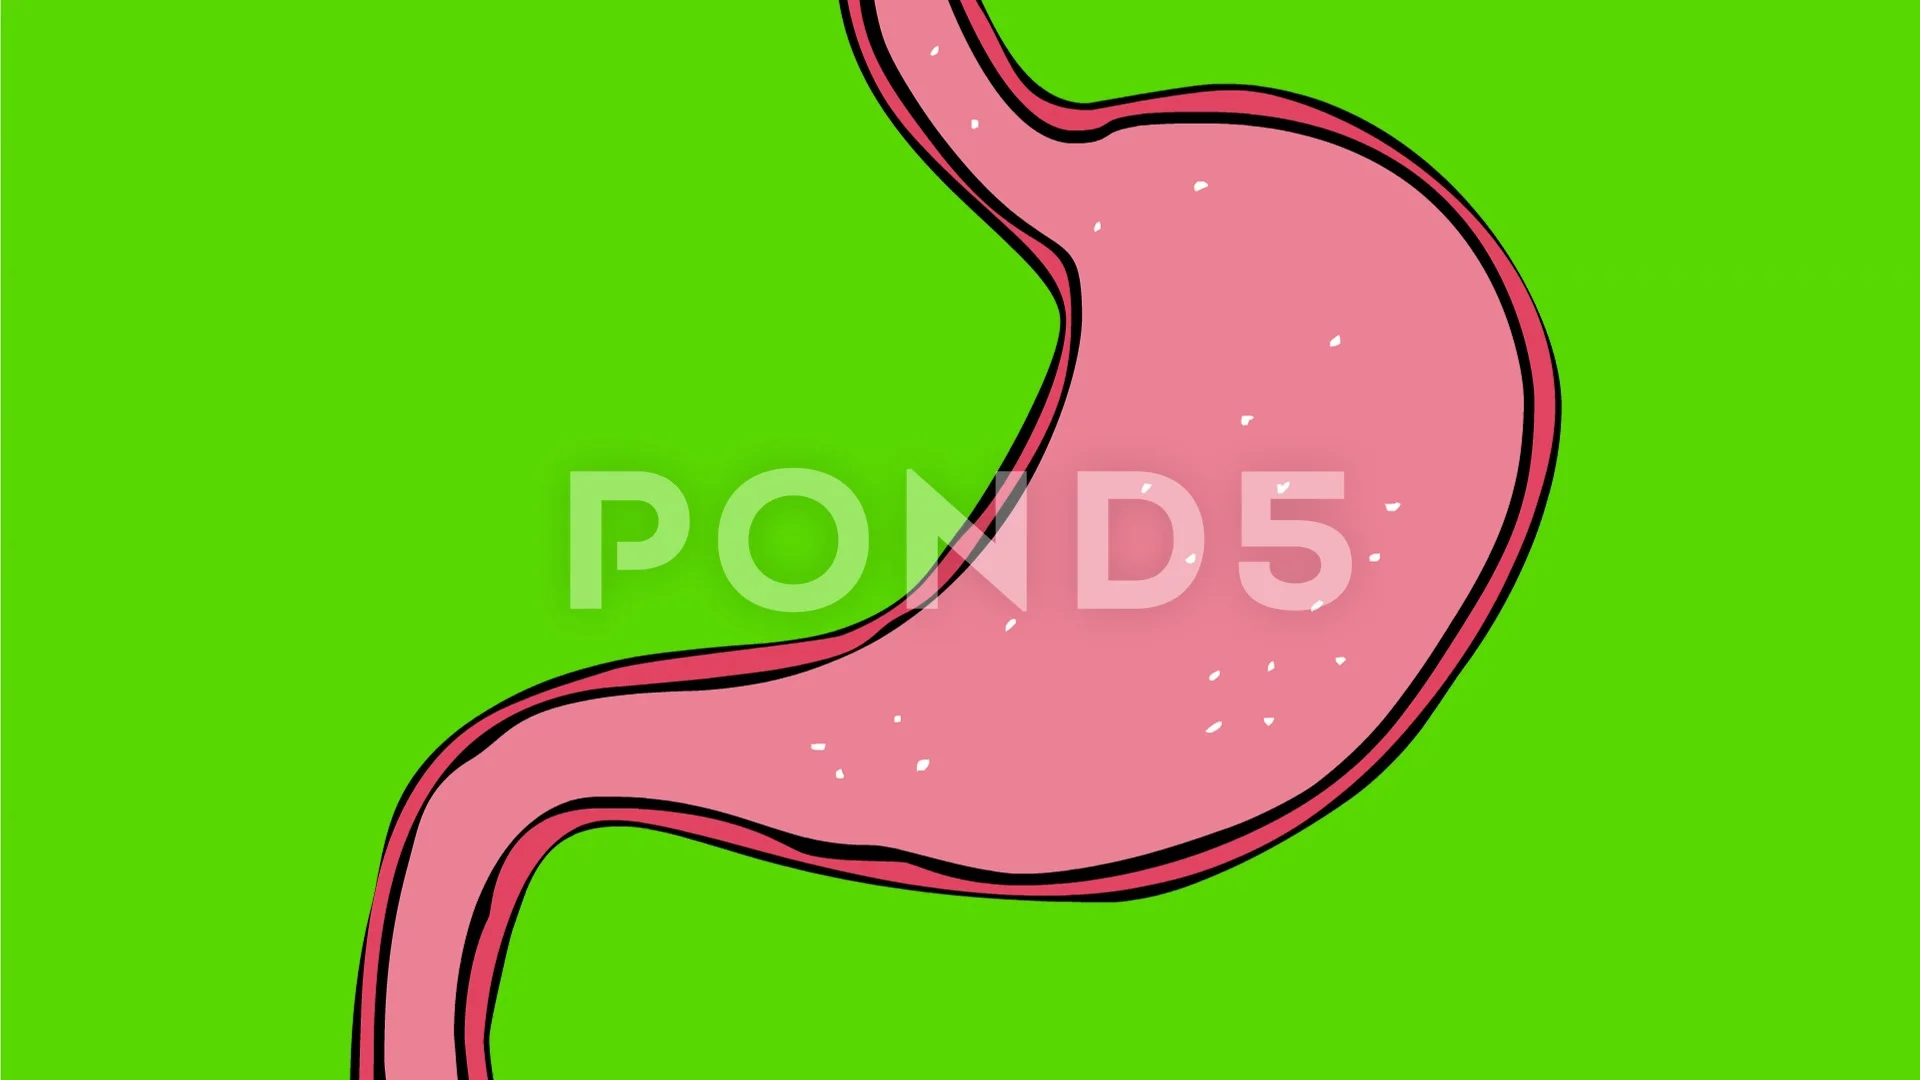 cartoon stomach organ